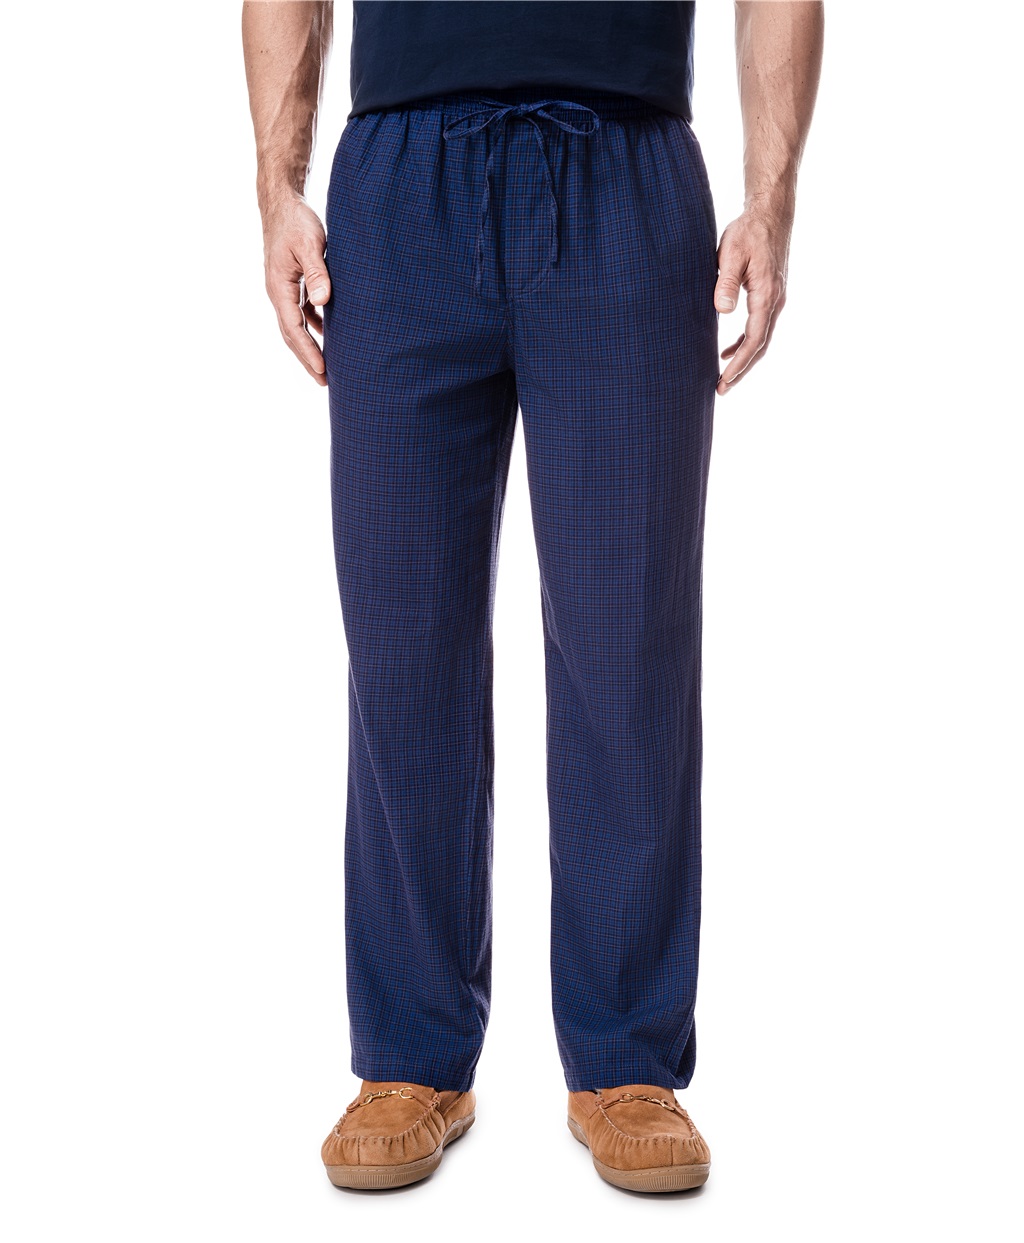 Пижамы и домашняя одежда Пижамные брюки HENDERSON PT-0050 NAVY